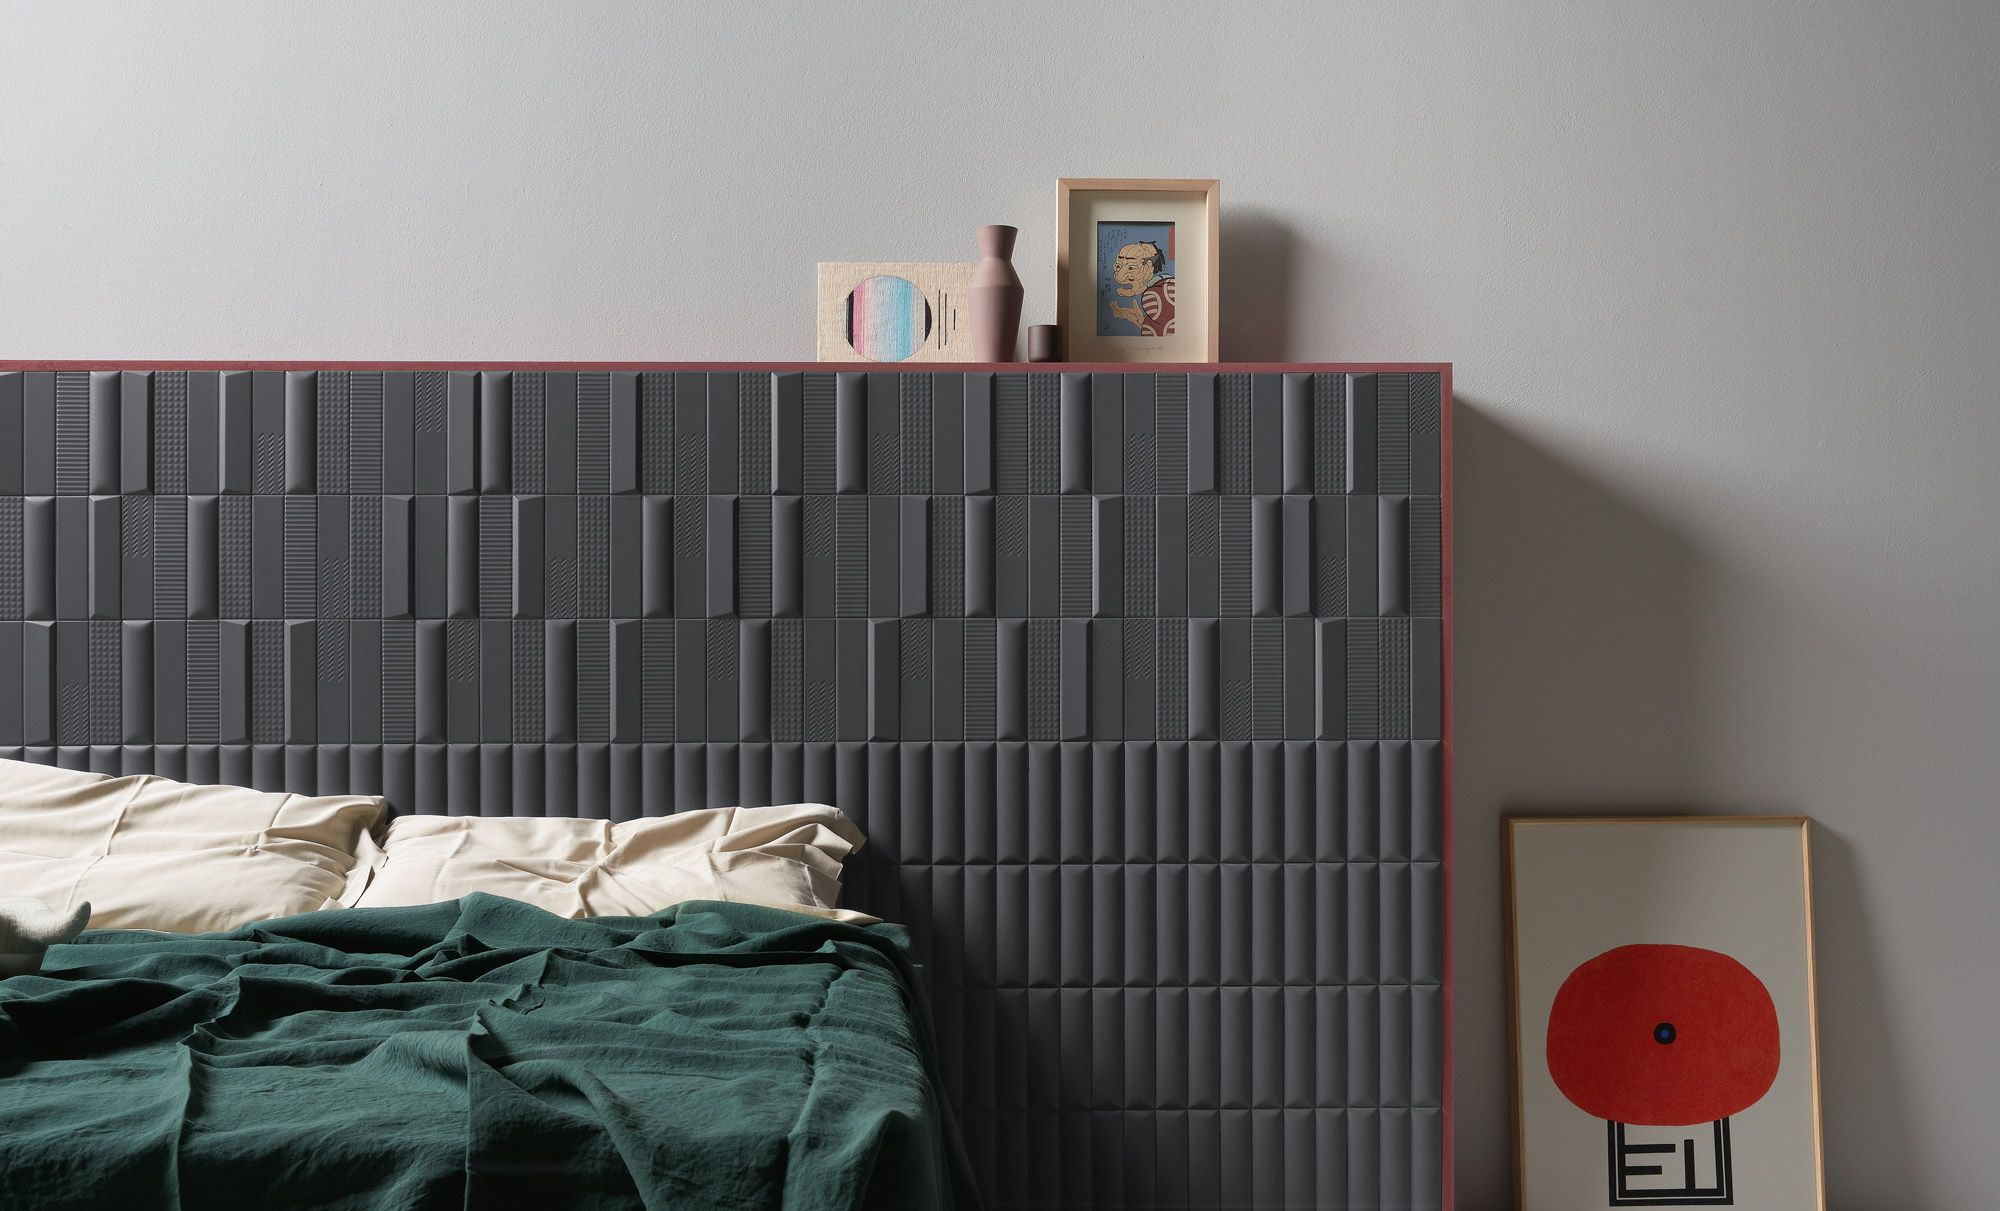 Urban Industrial Wall Tiles for Backsplash Bathroom Kitchen and Living  Room, Easy Peel & Stick, 12x24 (8pcs/Box, 16sqft) (Grey Granite)